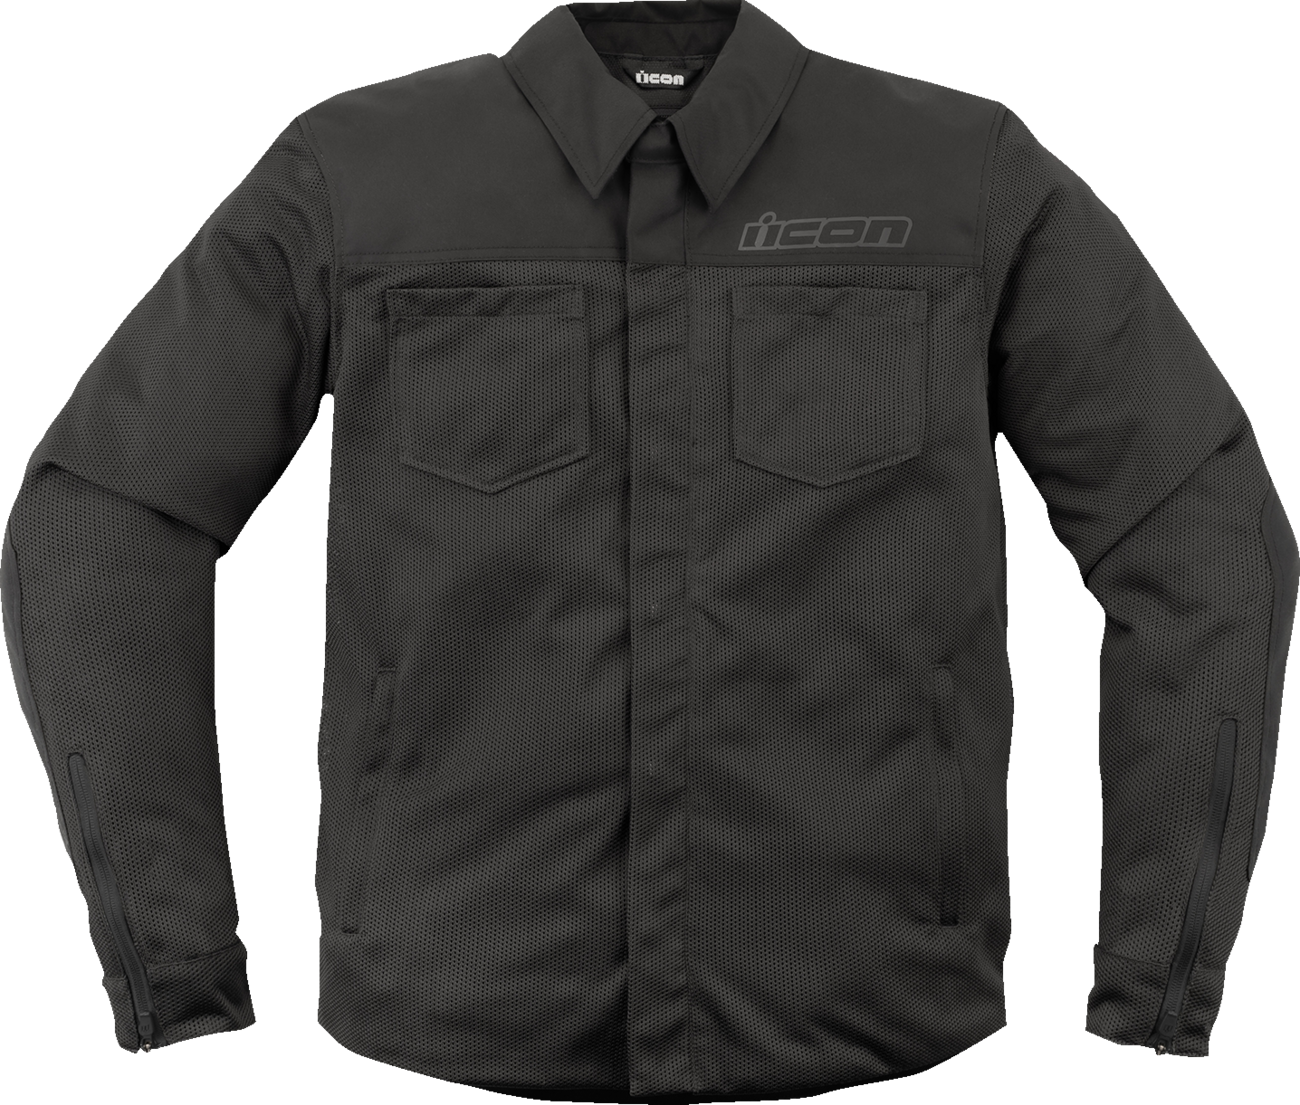 ICON Upstate Mesh CE Jacket - Black - Small 2820-6217